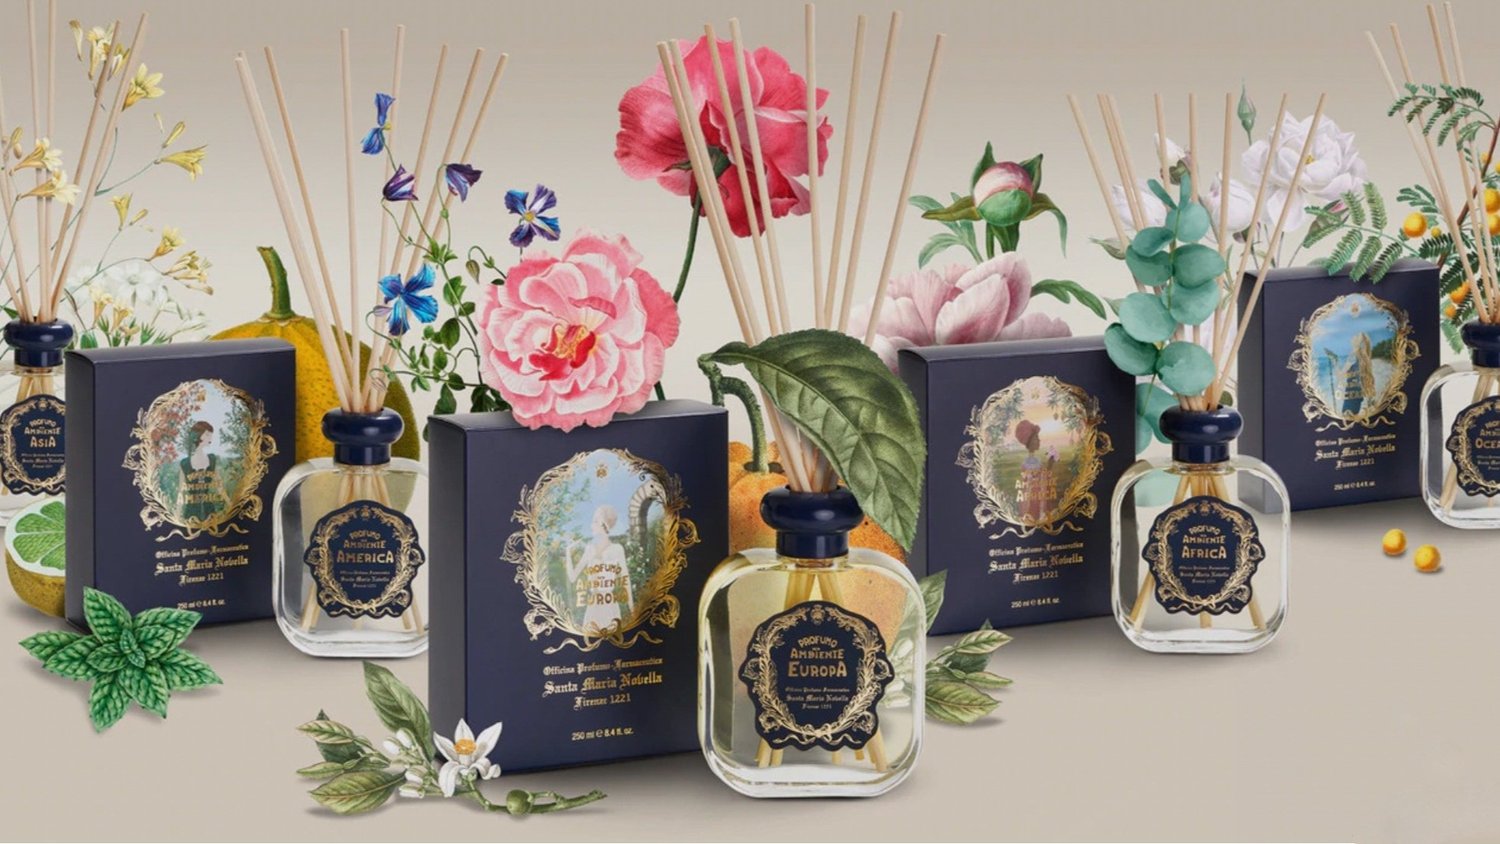 Pot Pourri Room Fragrance Diffuser Scented Room Diffuser by Santa Maria  Novella